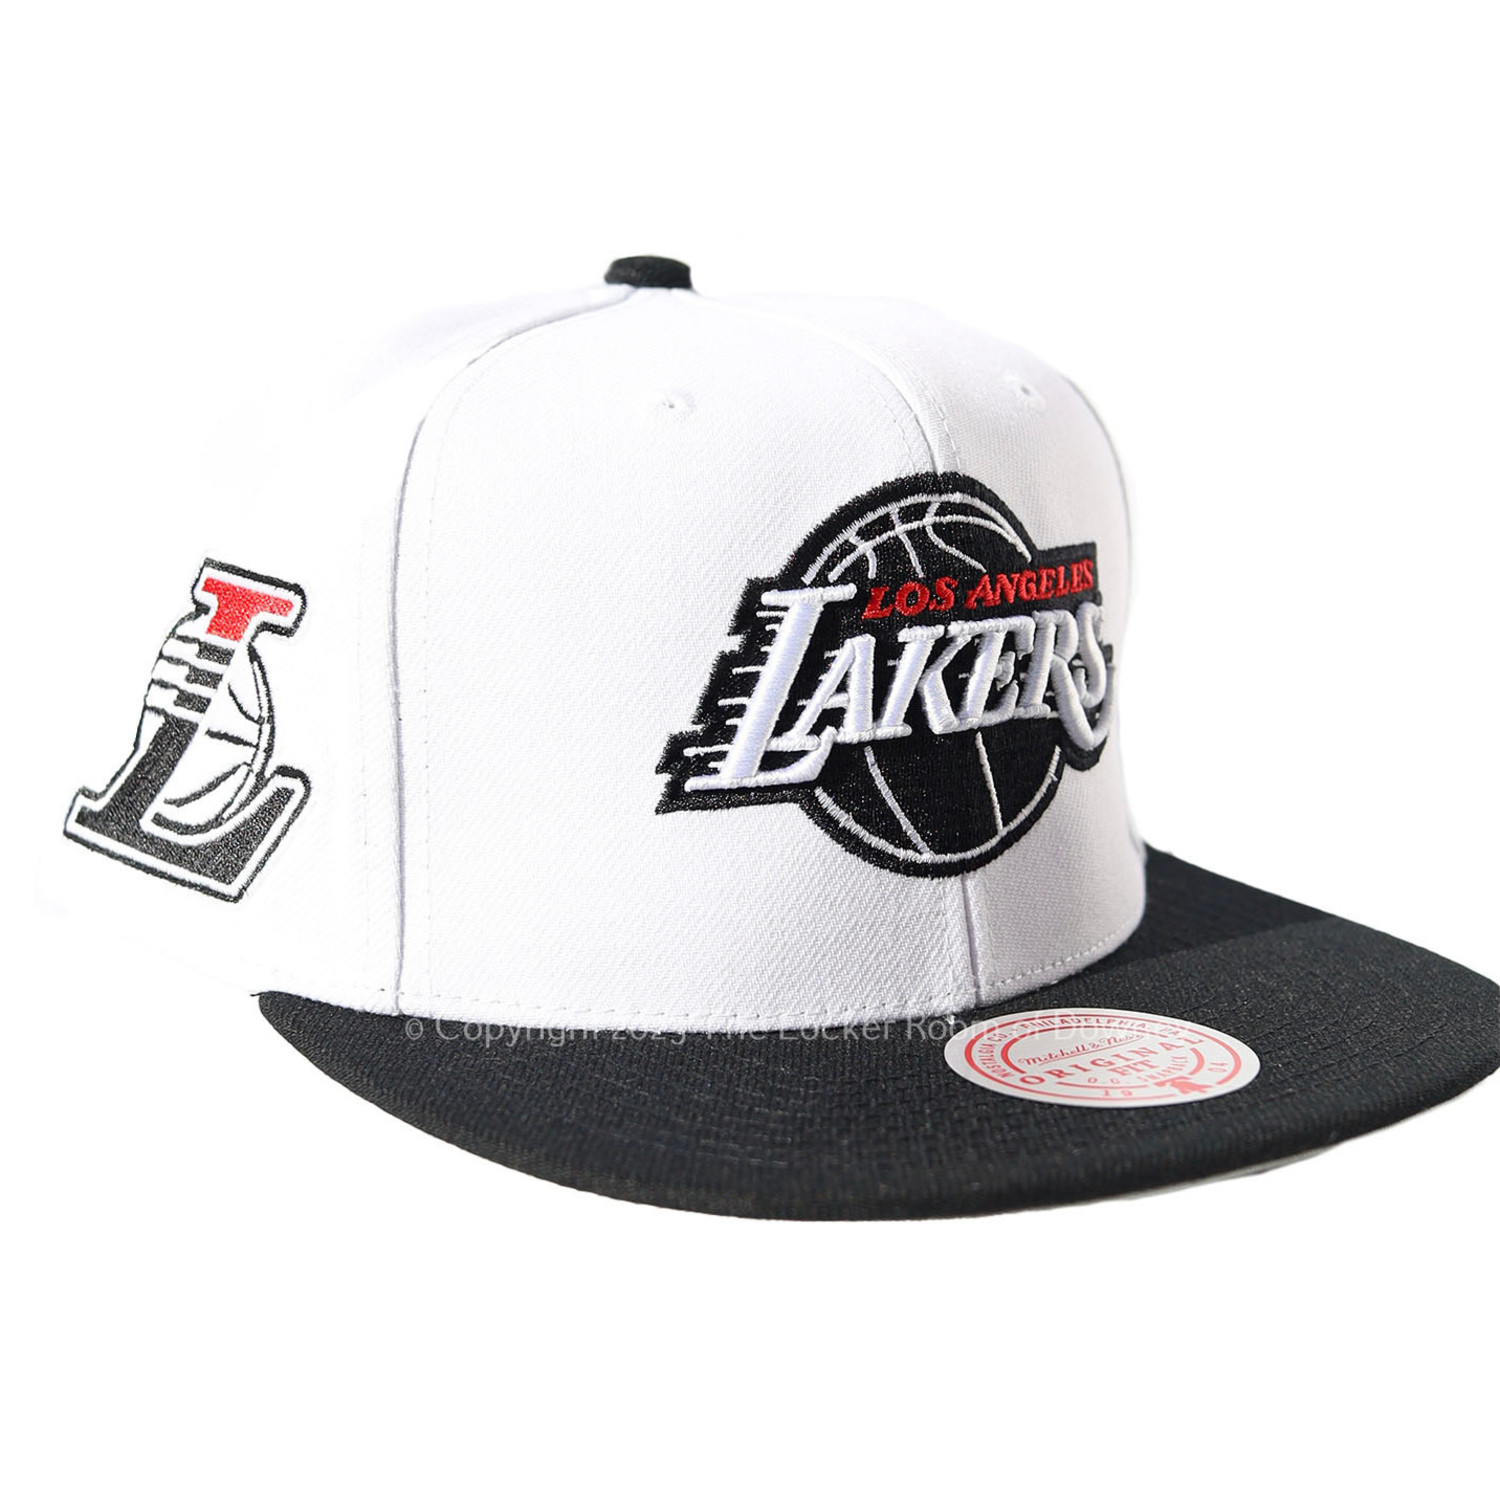 Lakers M&N Nylon SZN Deadstock Snapback Black - The Locker Room of Downey